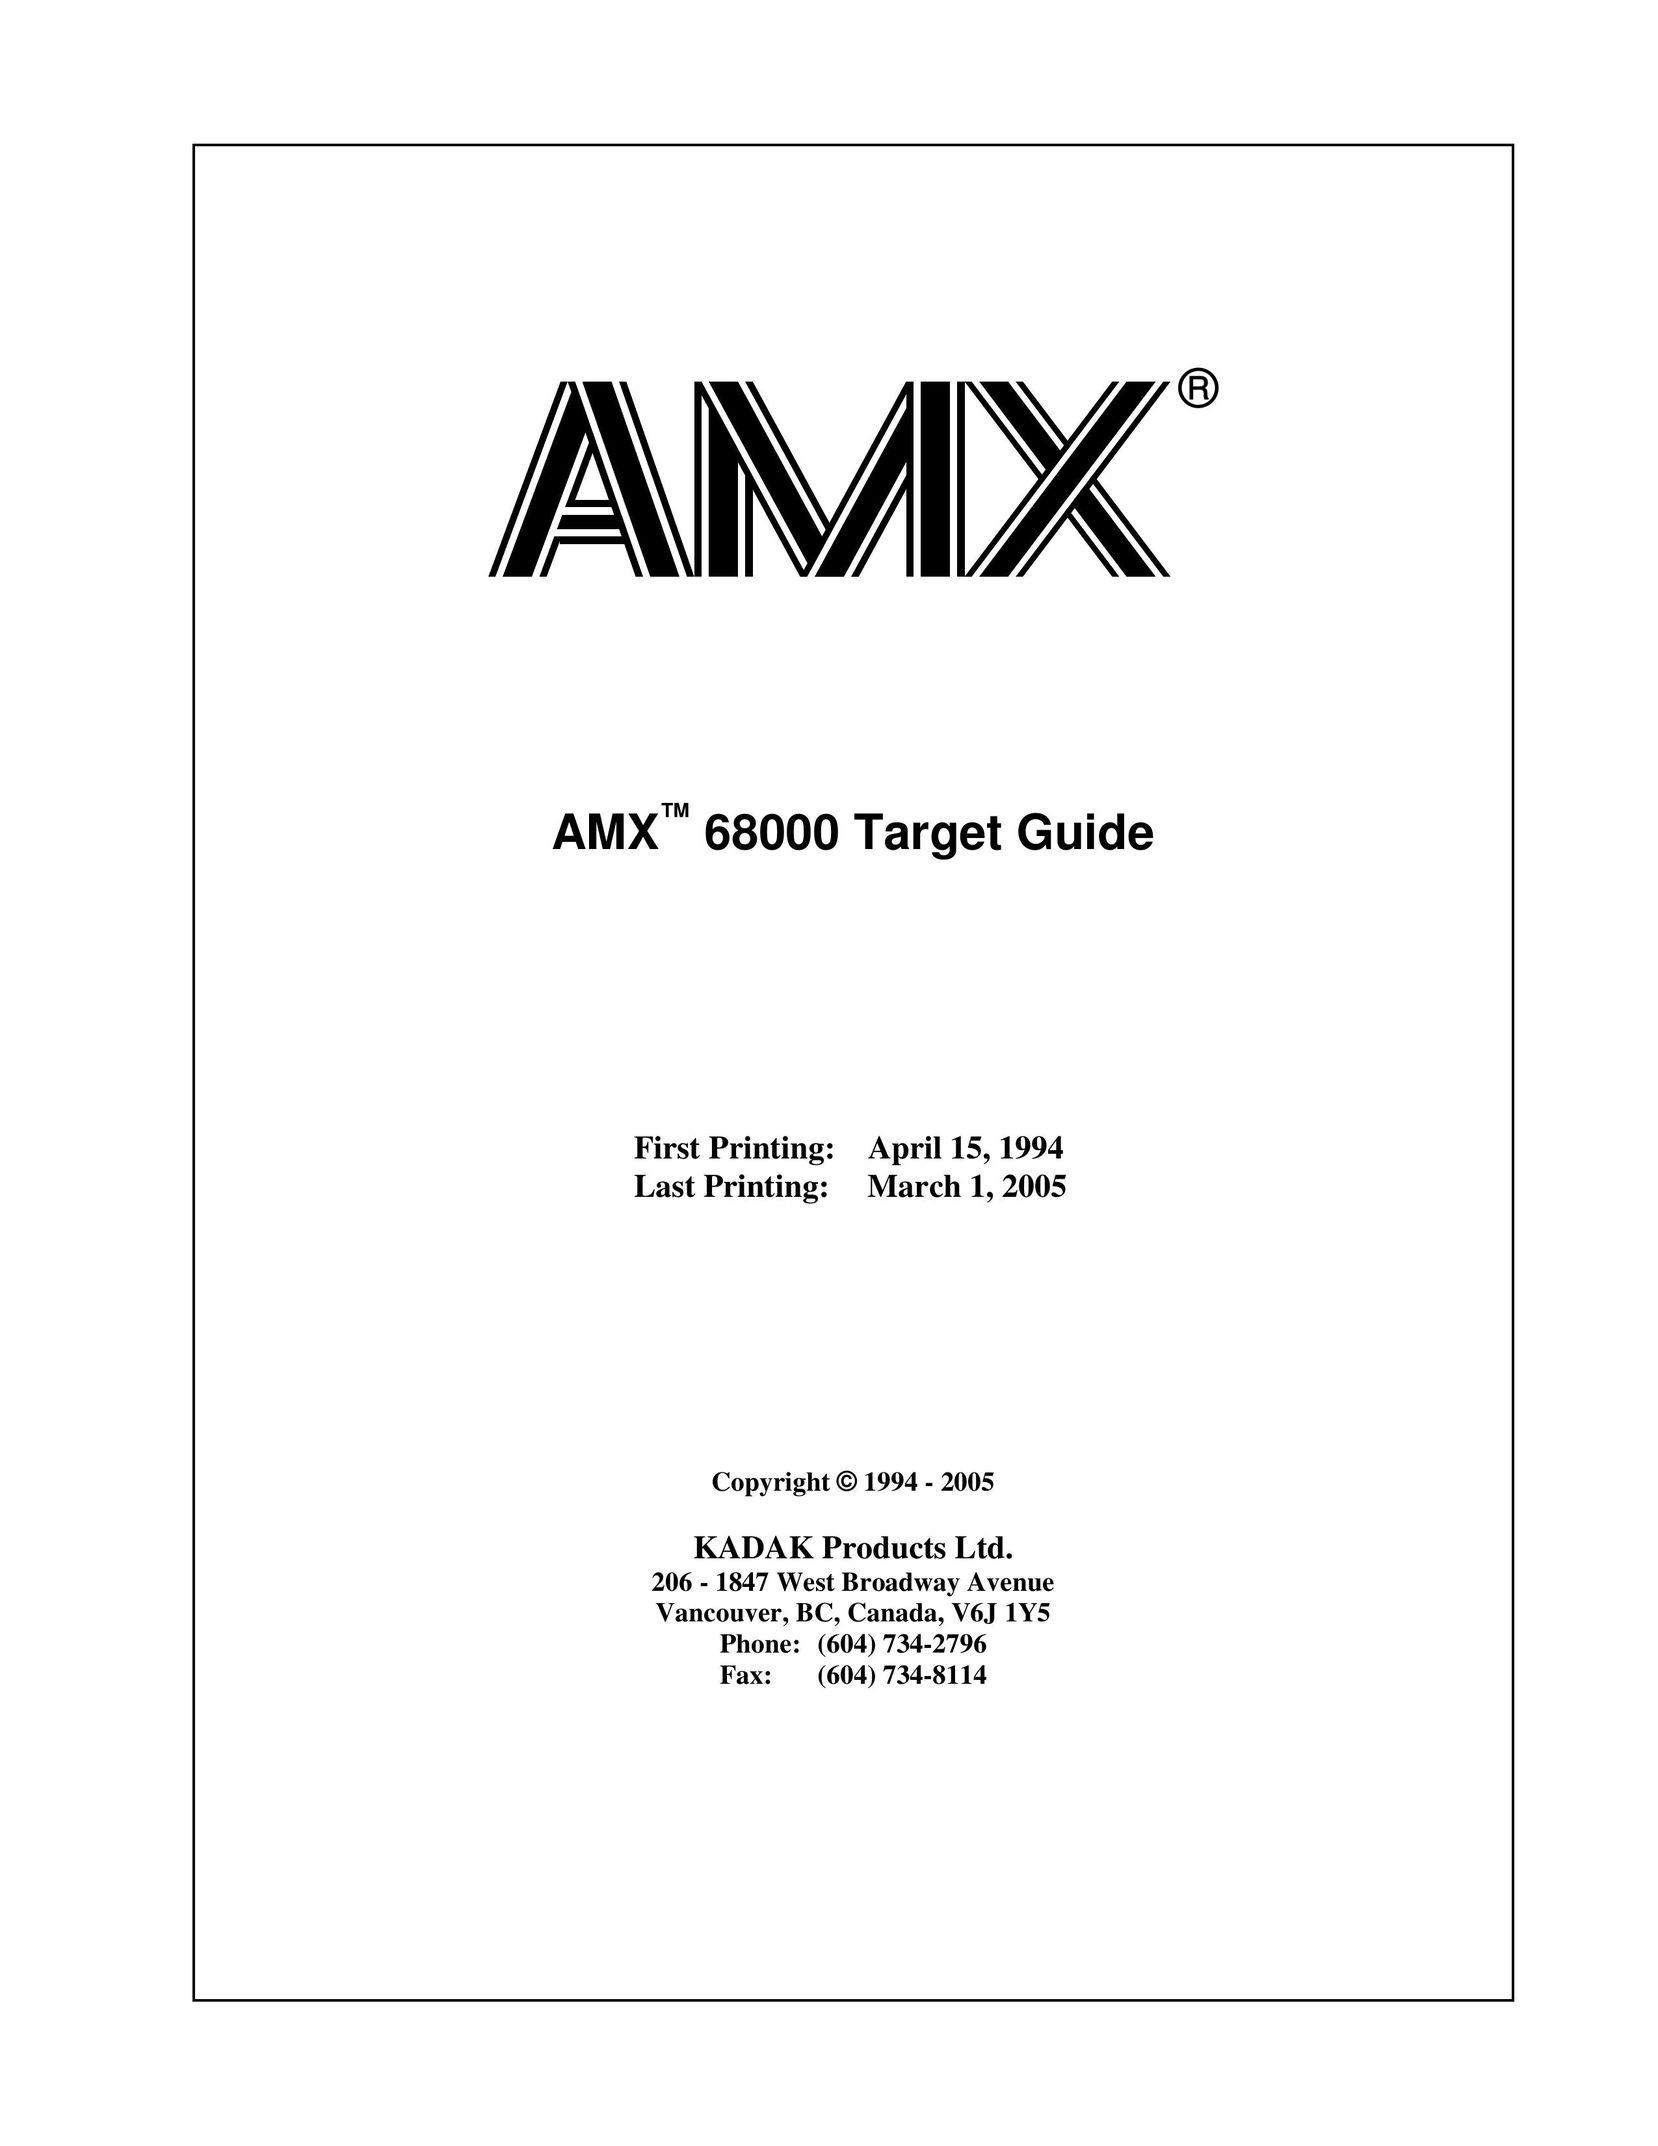 AMX 68000 Computer Accessories User Manual